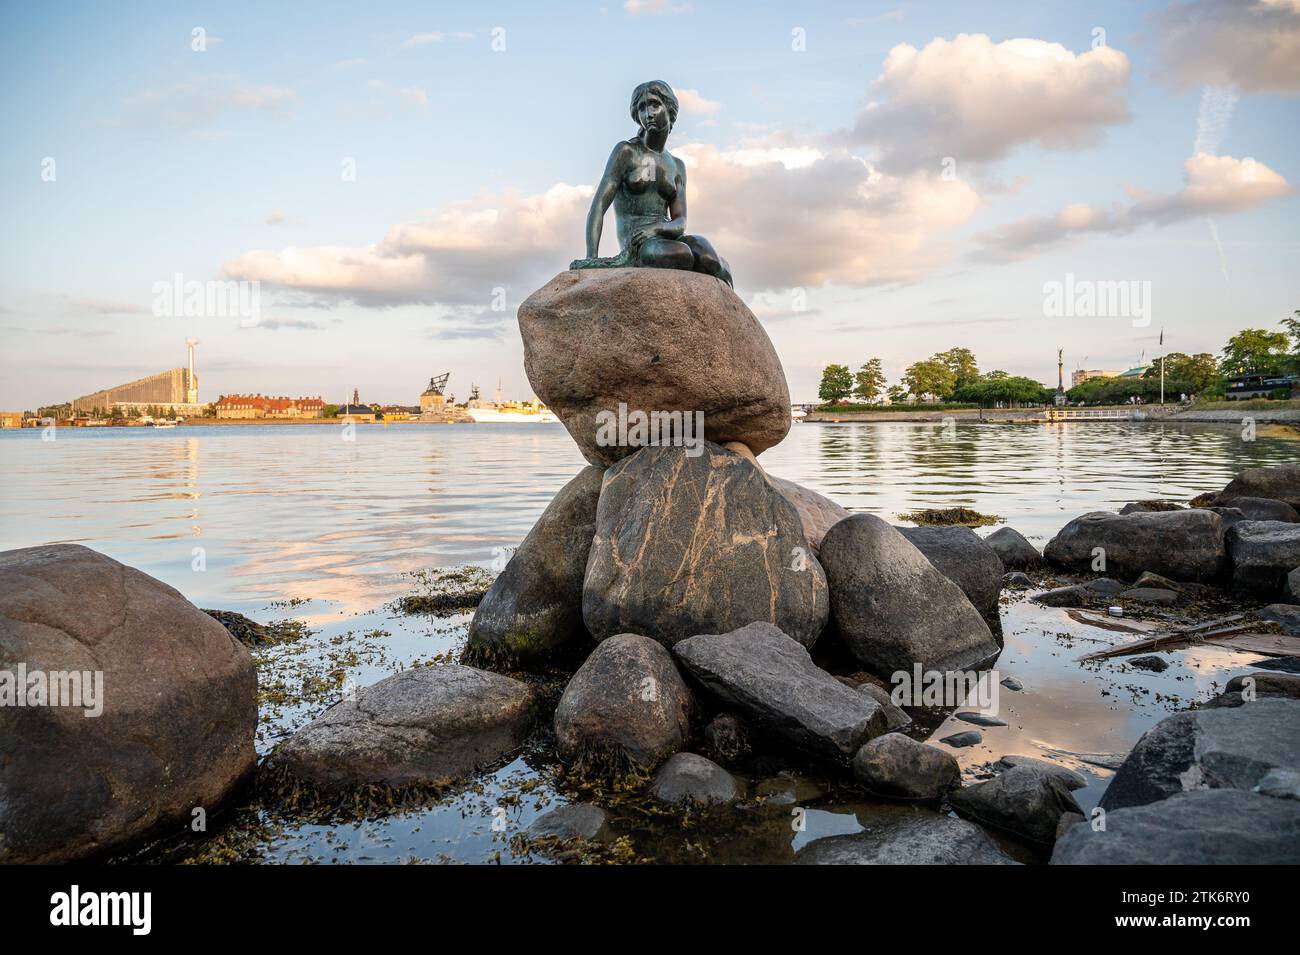 The Little Mermaid Statue at day time in Copenhagen Denmark Stock Photo